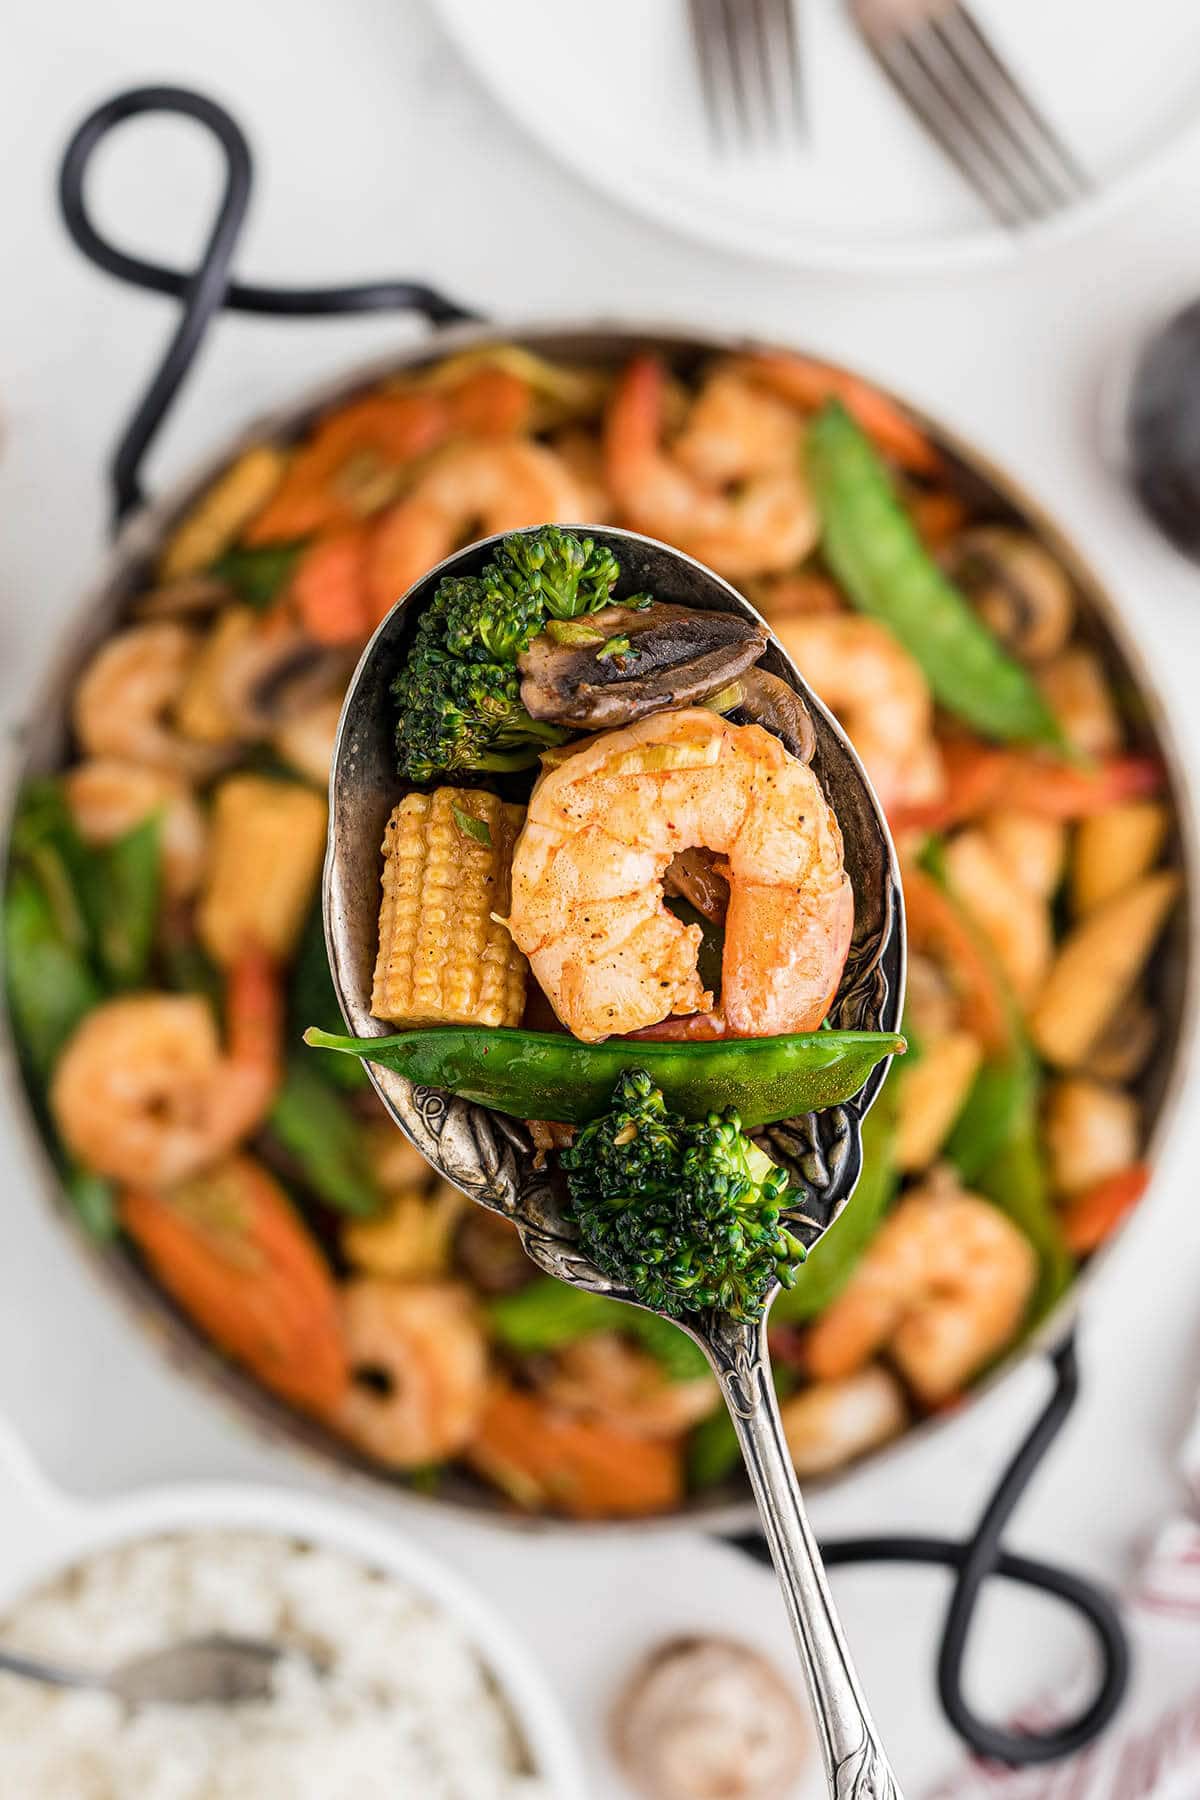 Shrimp chop suey in pan with serving spoon.